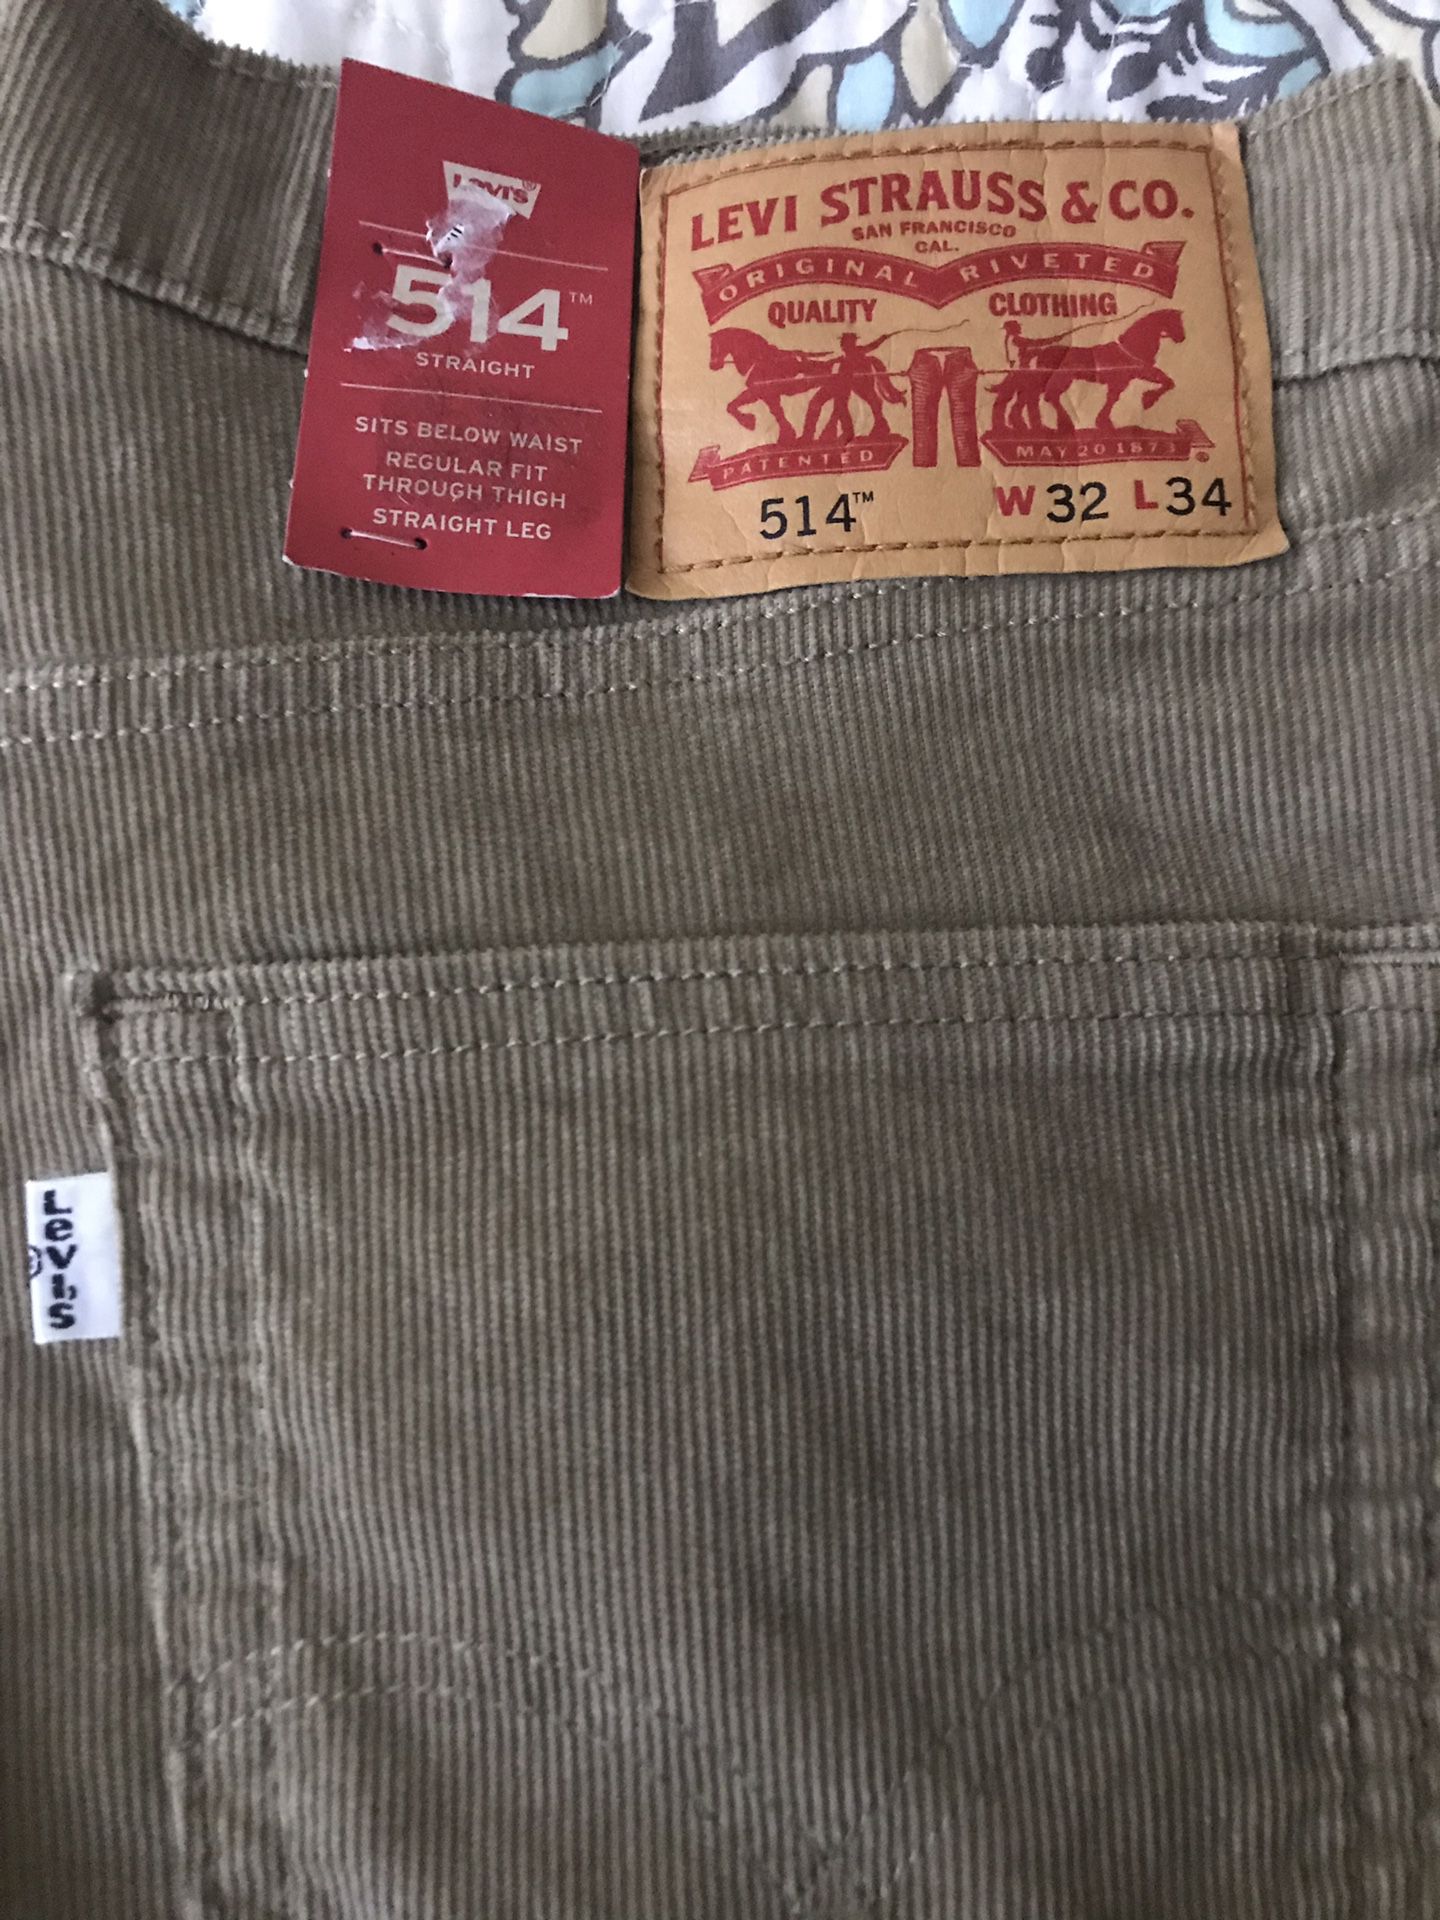 BRAND NEW Levi’s 514 Men’s Stretch Corduroy Jeans from Macy’s Size 32 /34